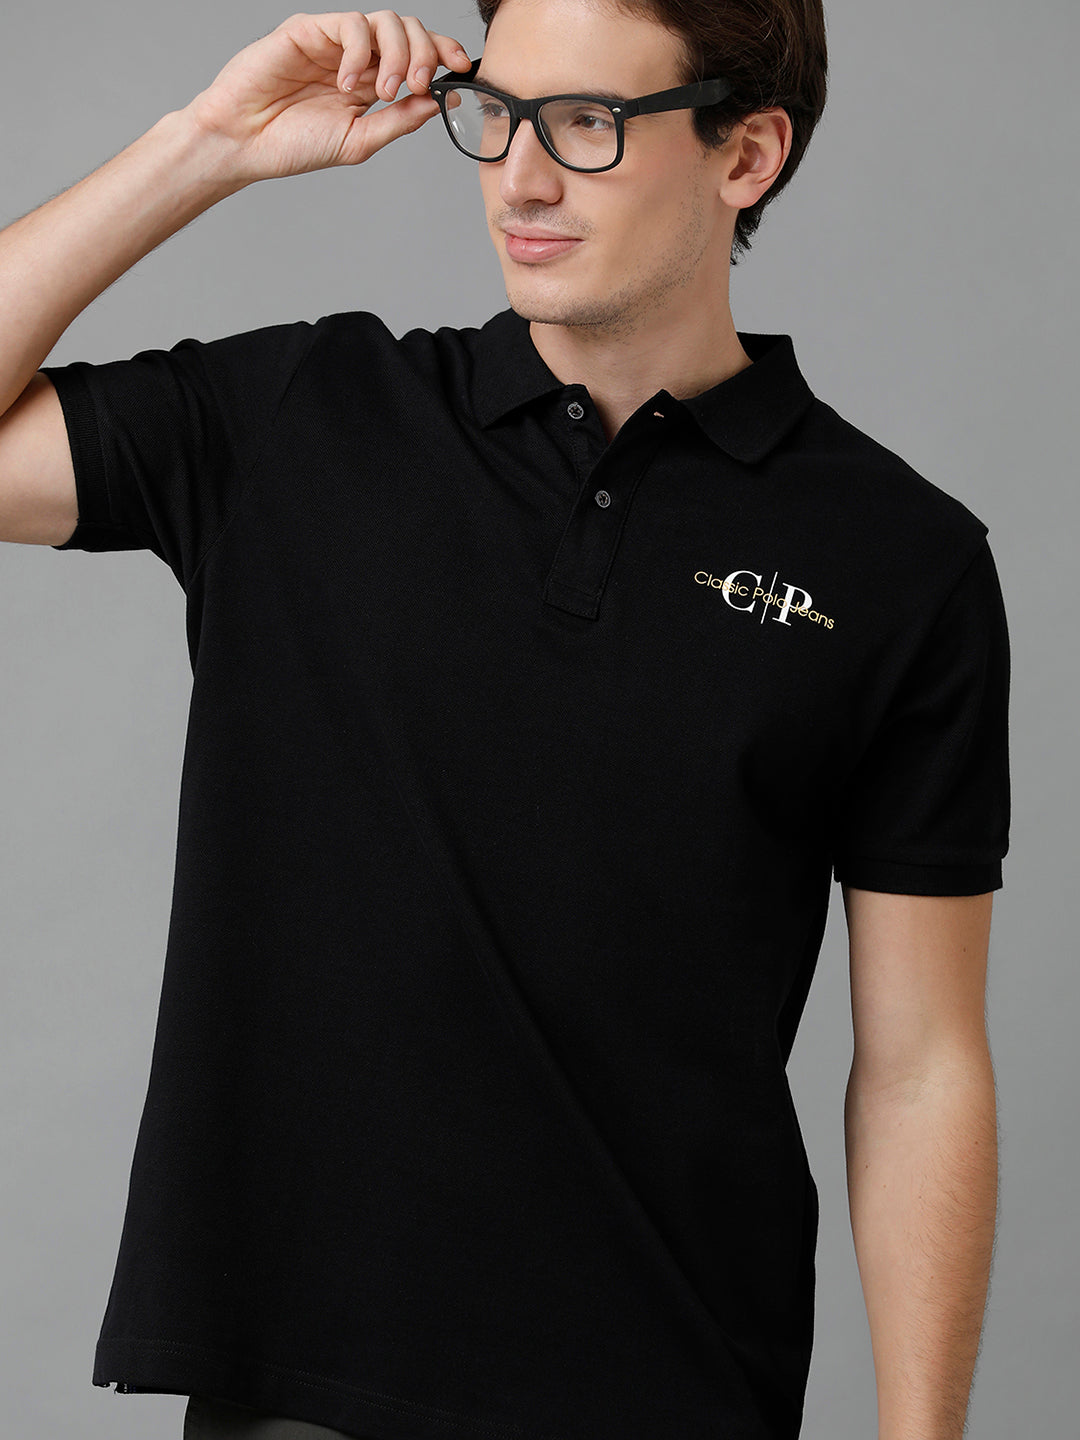 Classic Polo Men's Cotton Solid Half Sleeve Slim Fit Polo Neck Black Color T-Shirt | Prm - 768 A